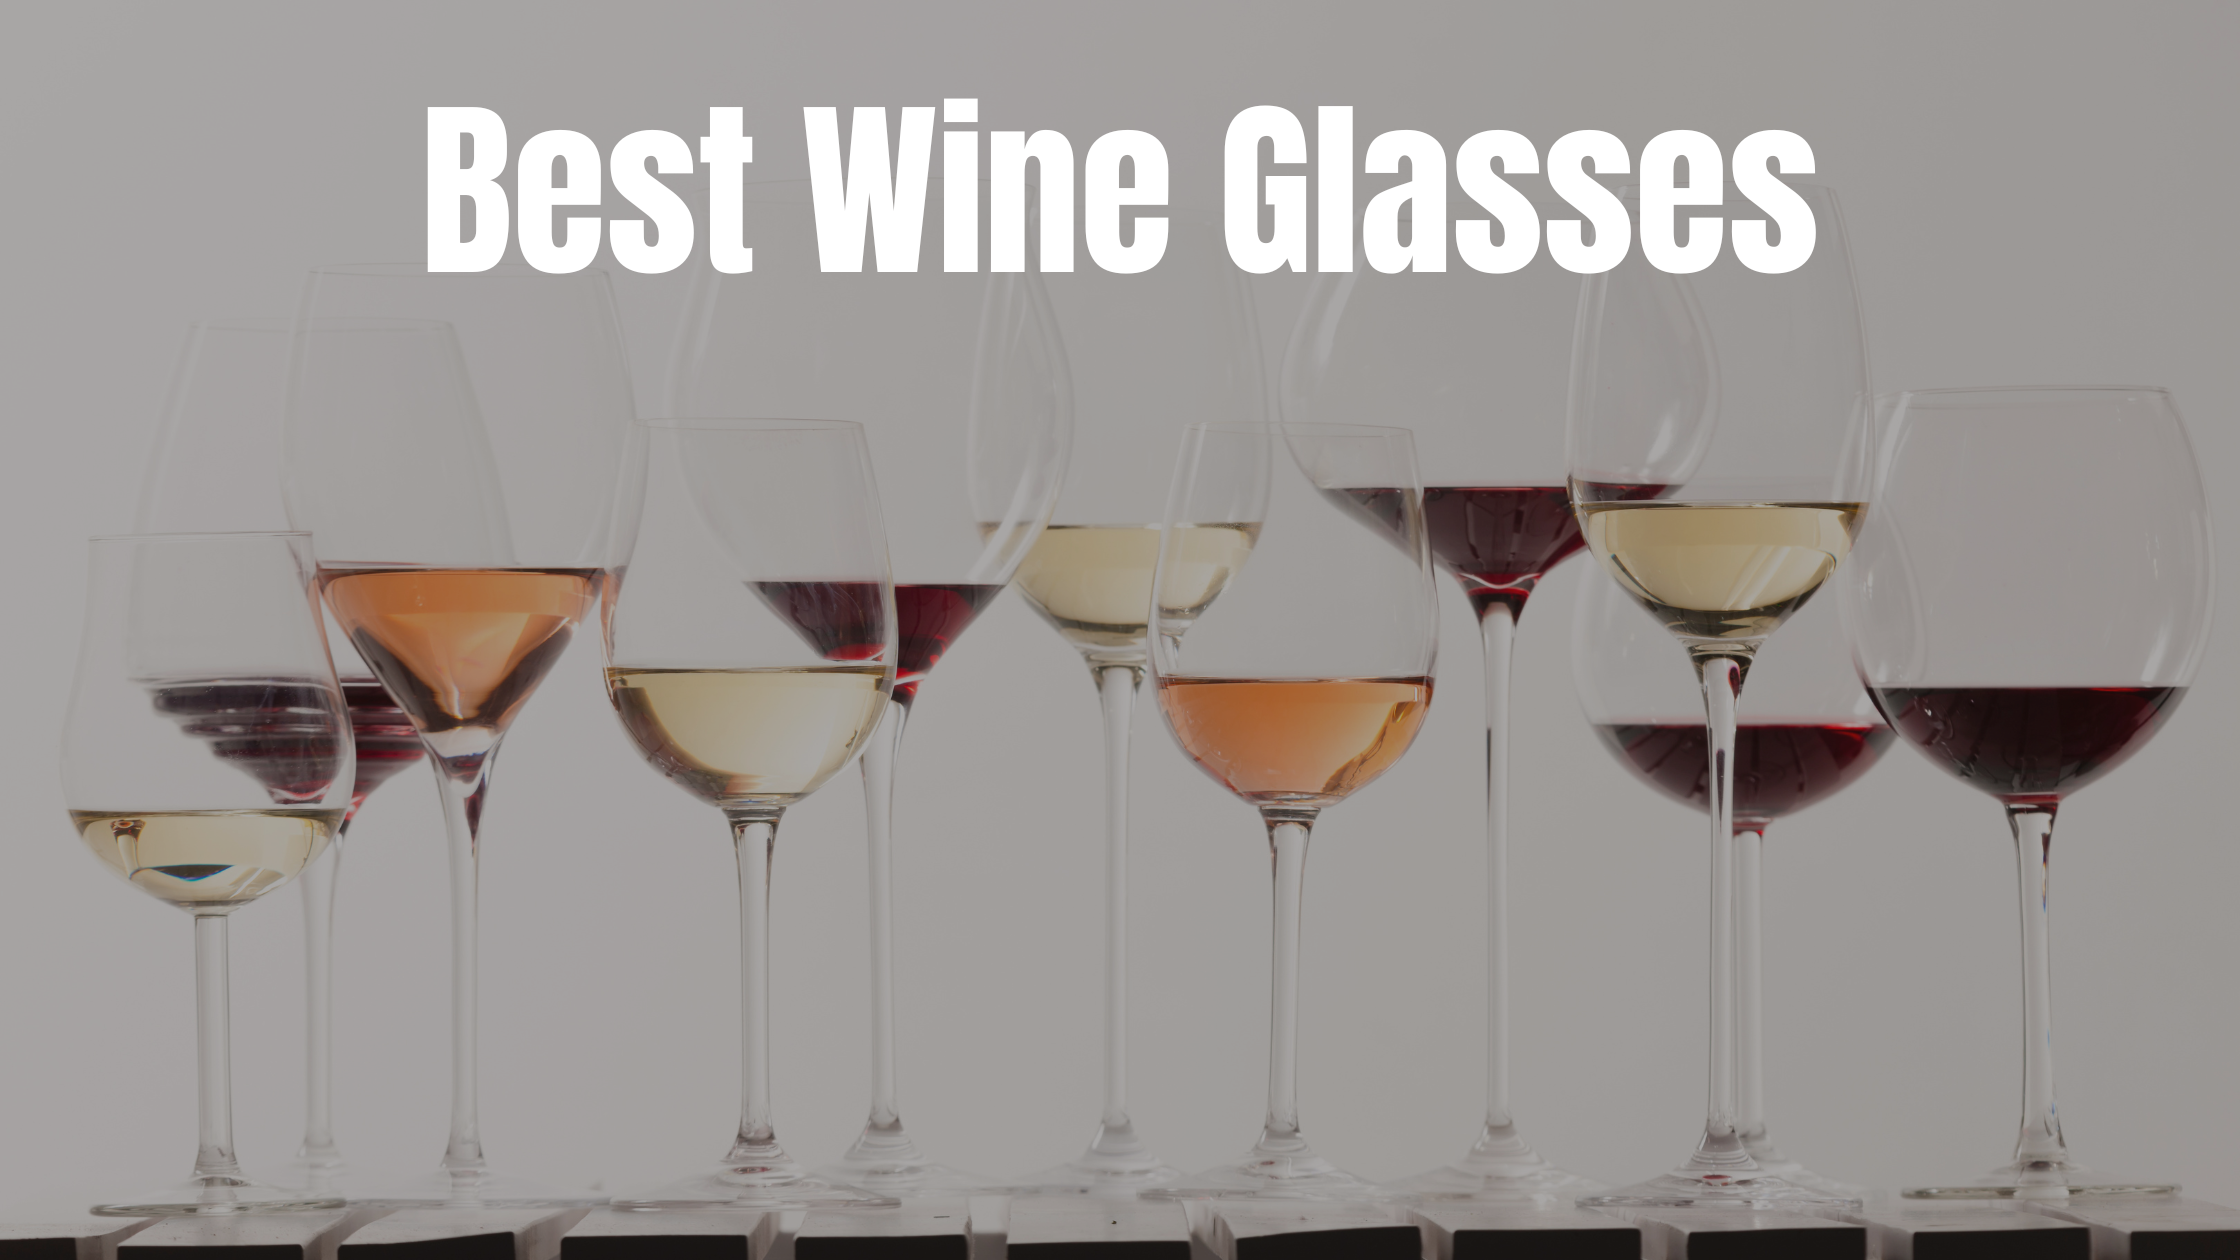 https://images.squarespace-cdn.com/content/v1/623e07ff3f5980785c3eeefb/8c412992-4af8-46ae-87ad-9a924a316d97/Best+Wine+Glasses